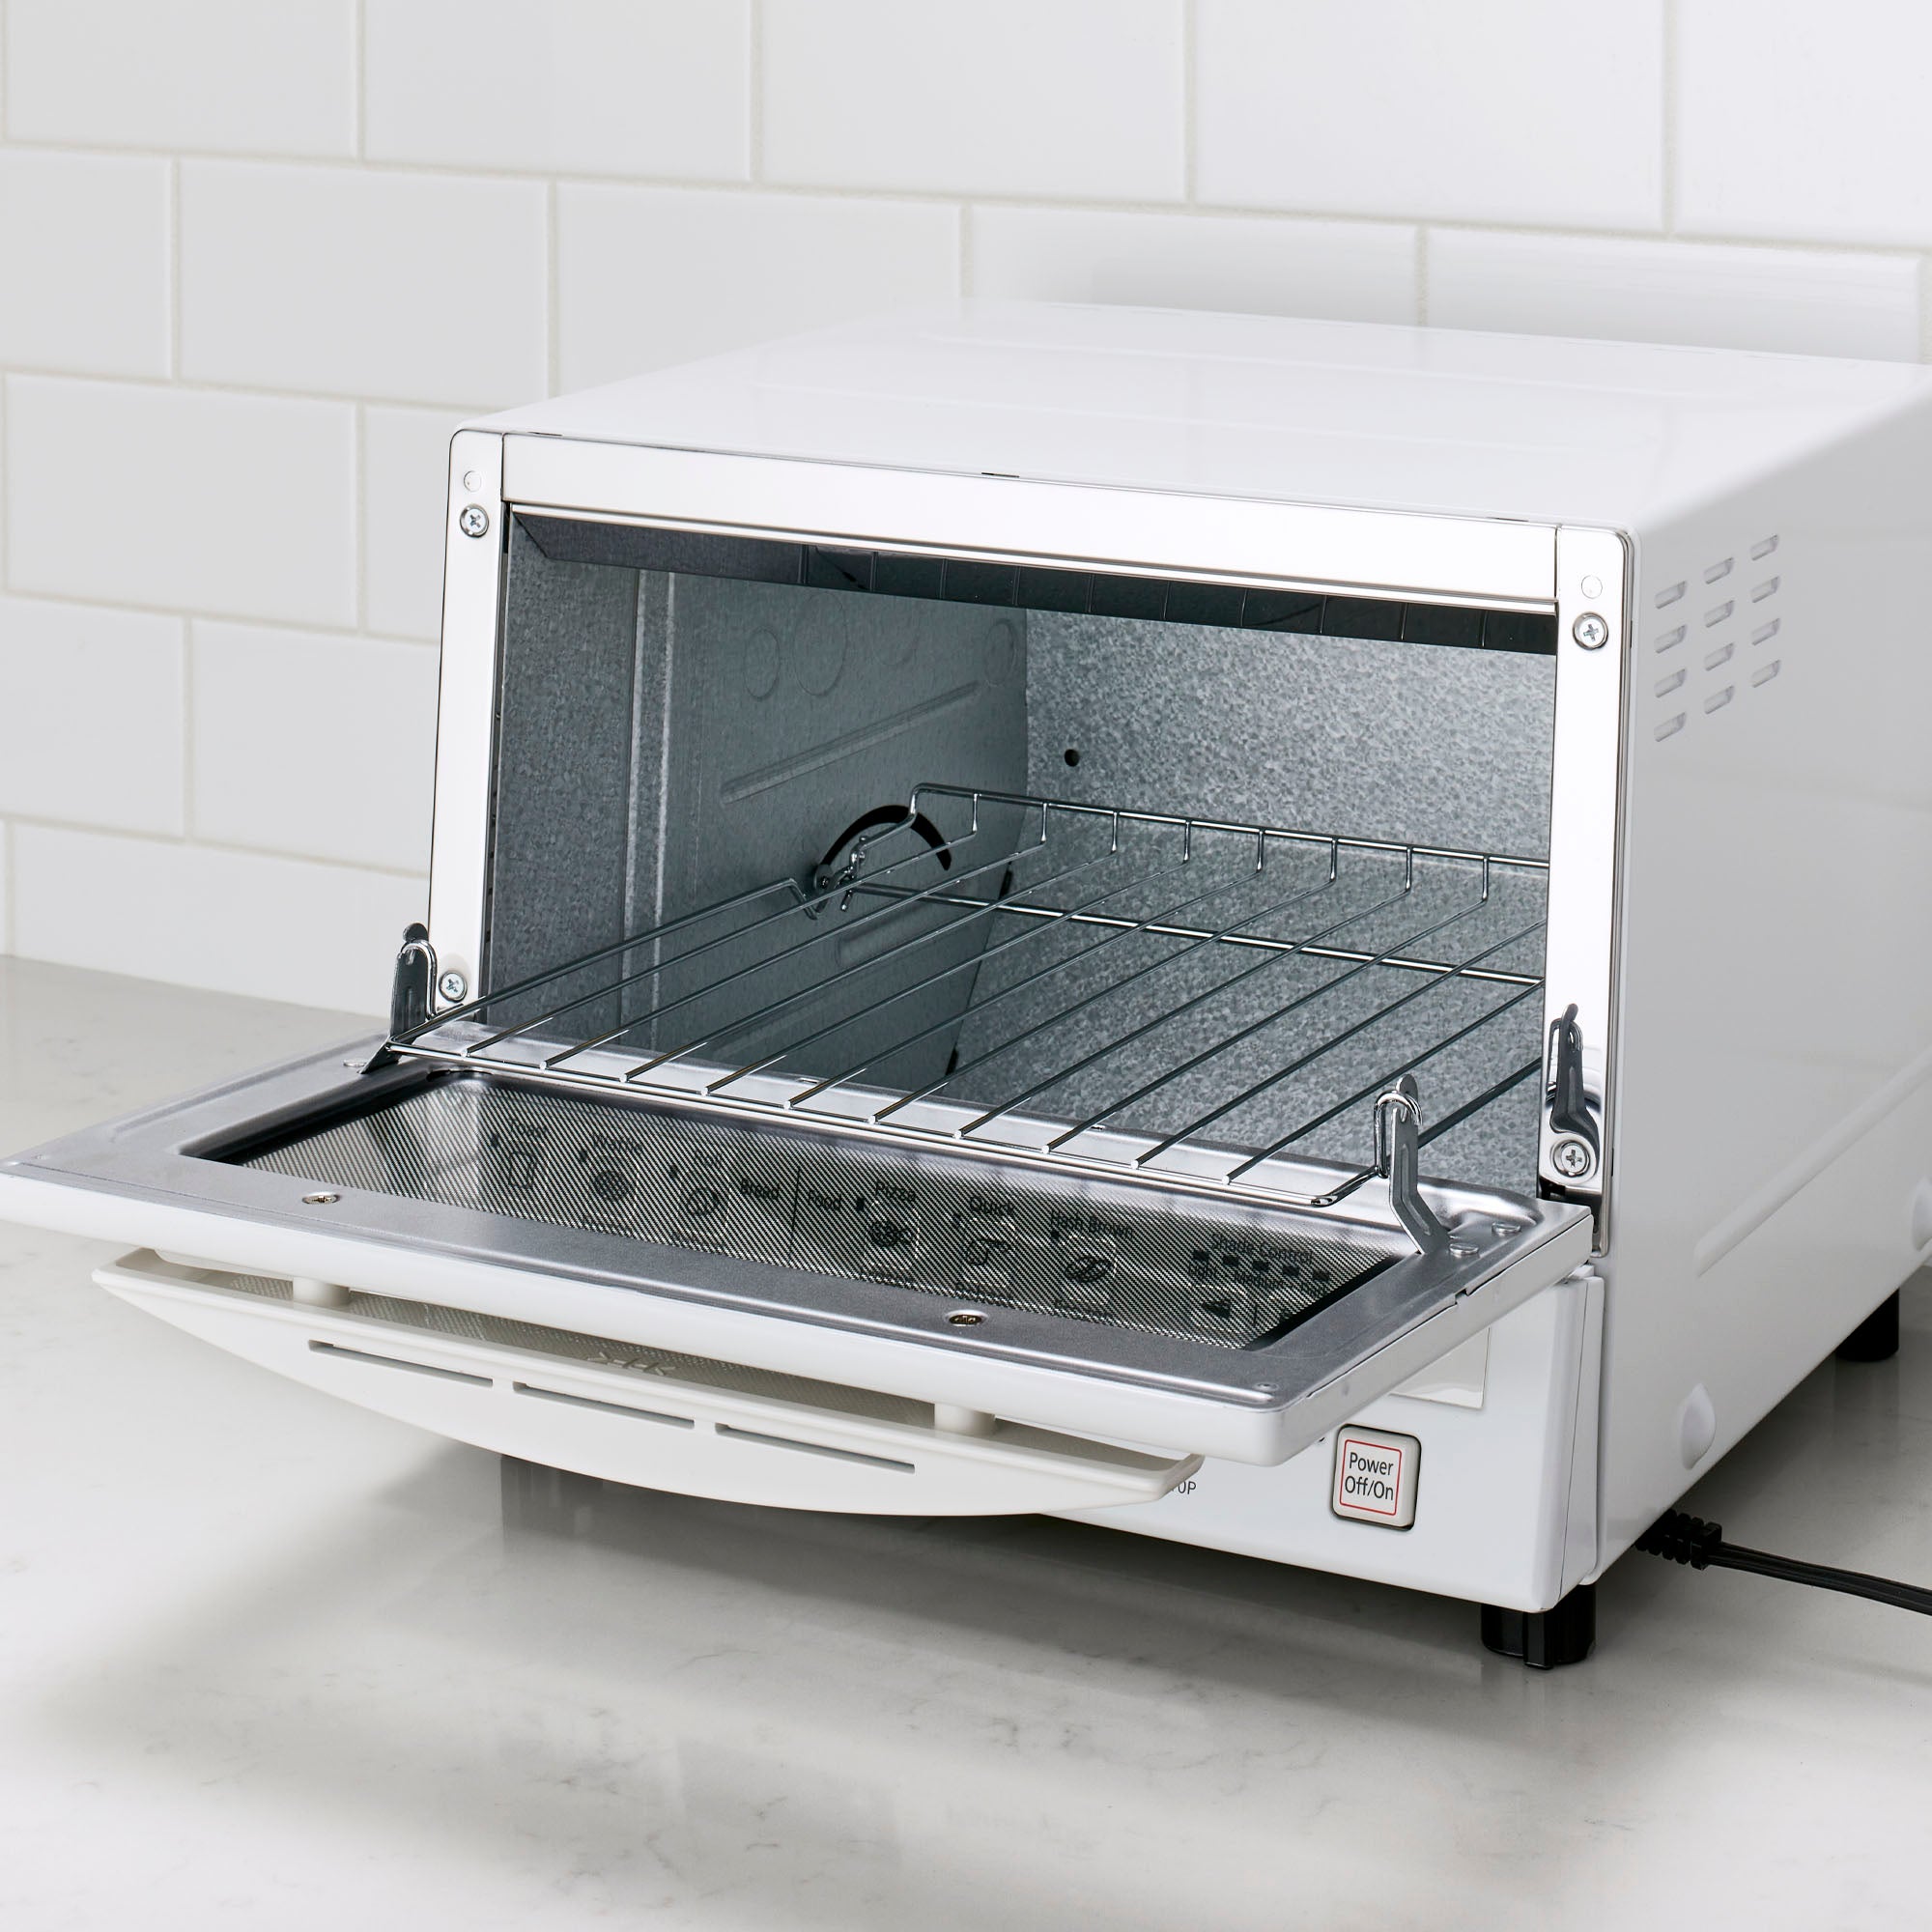 4-Slice Gray Toaster Oven